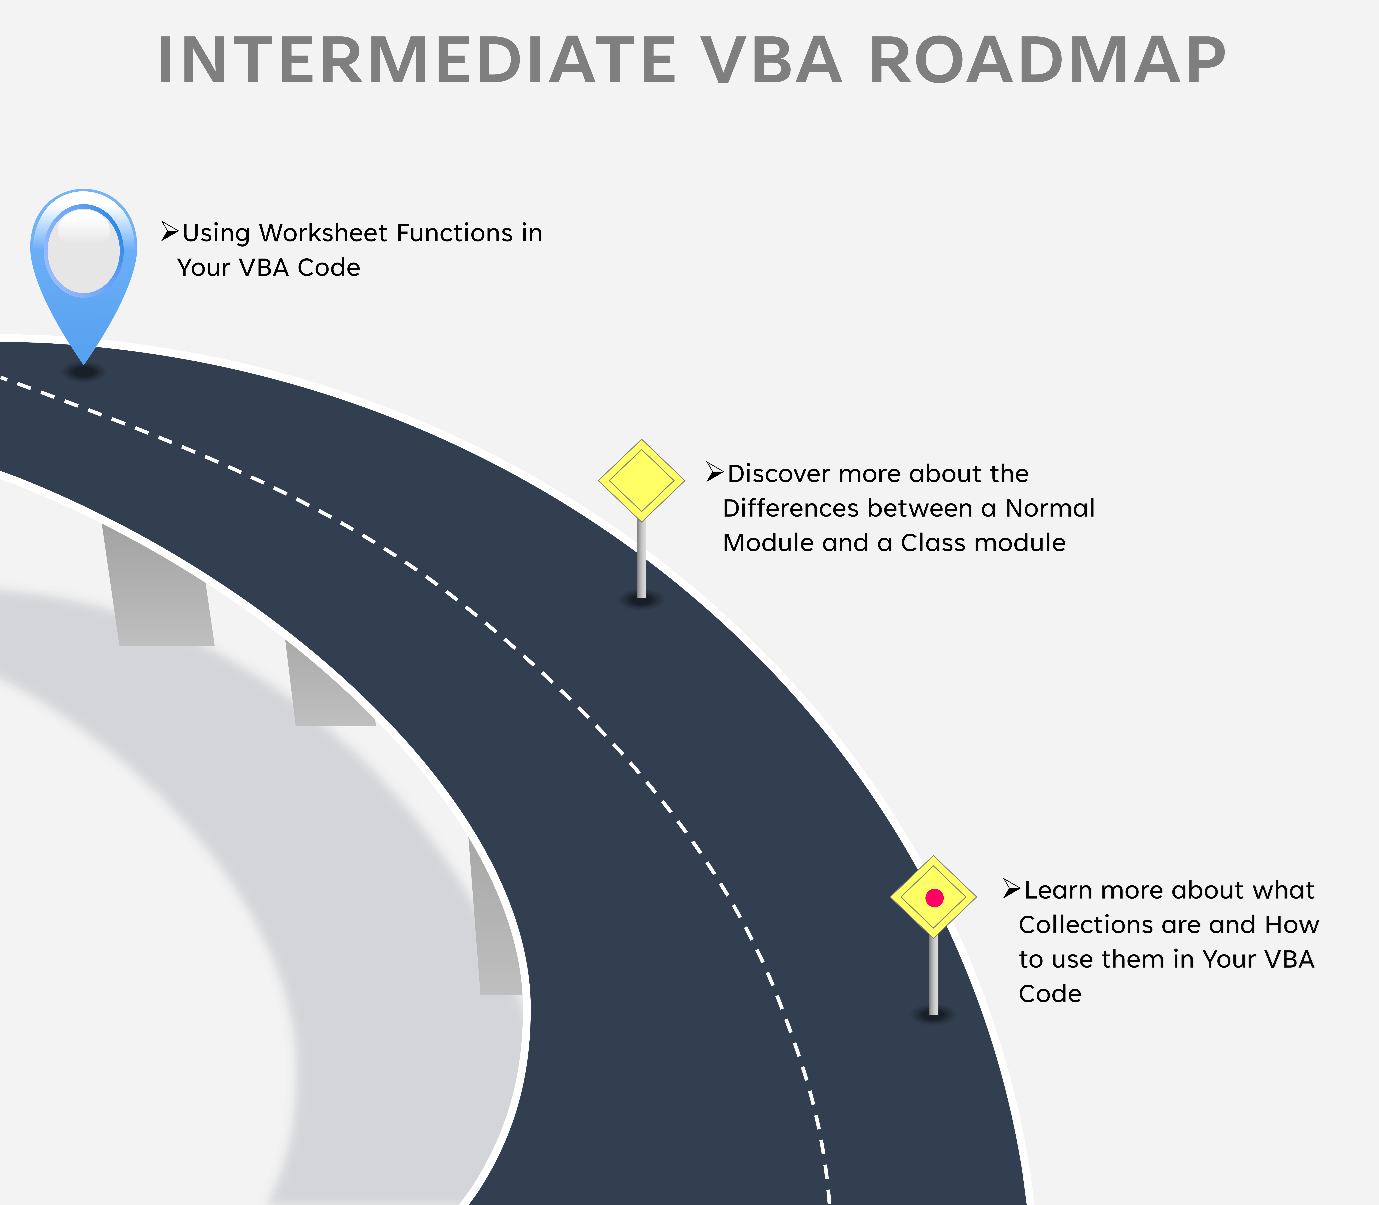 The Intermediate VBA Roadmap Graphic.